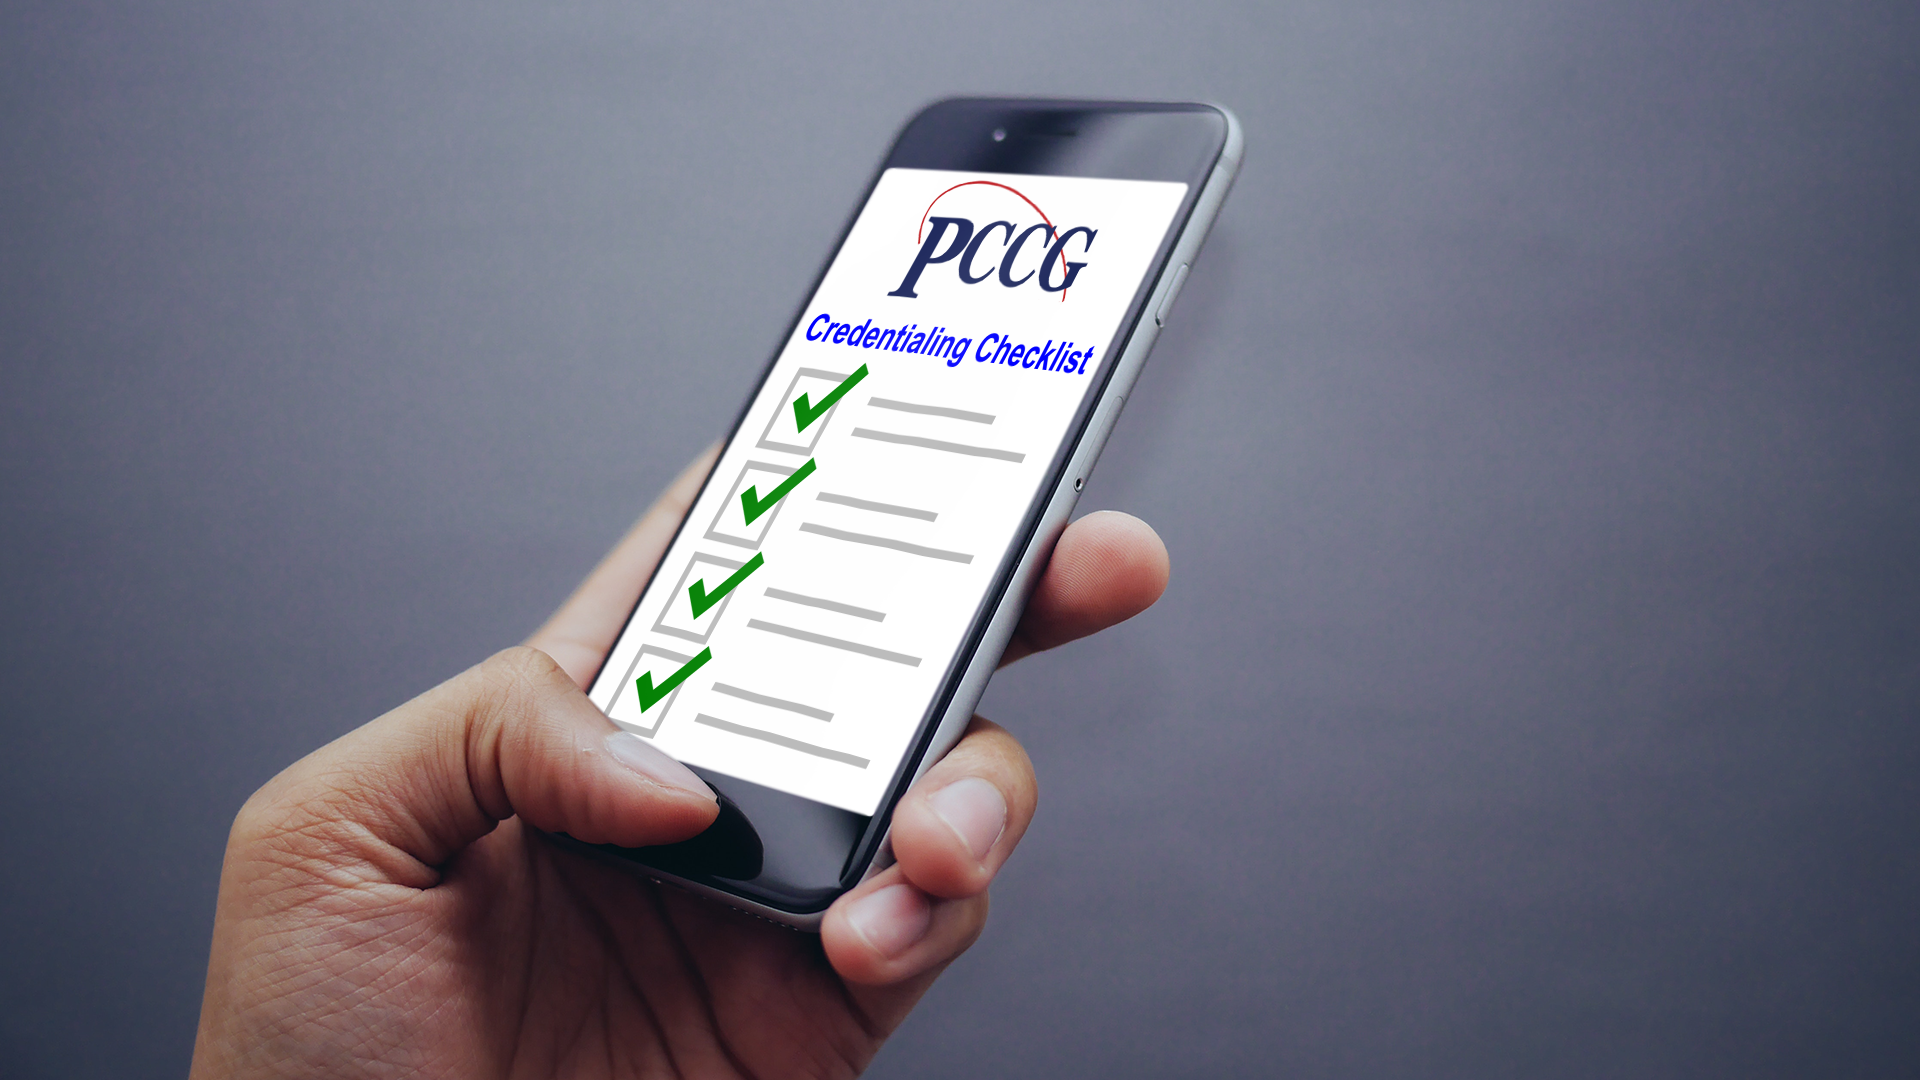 PCCG Checklist